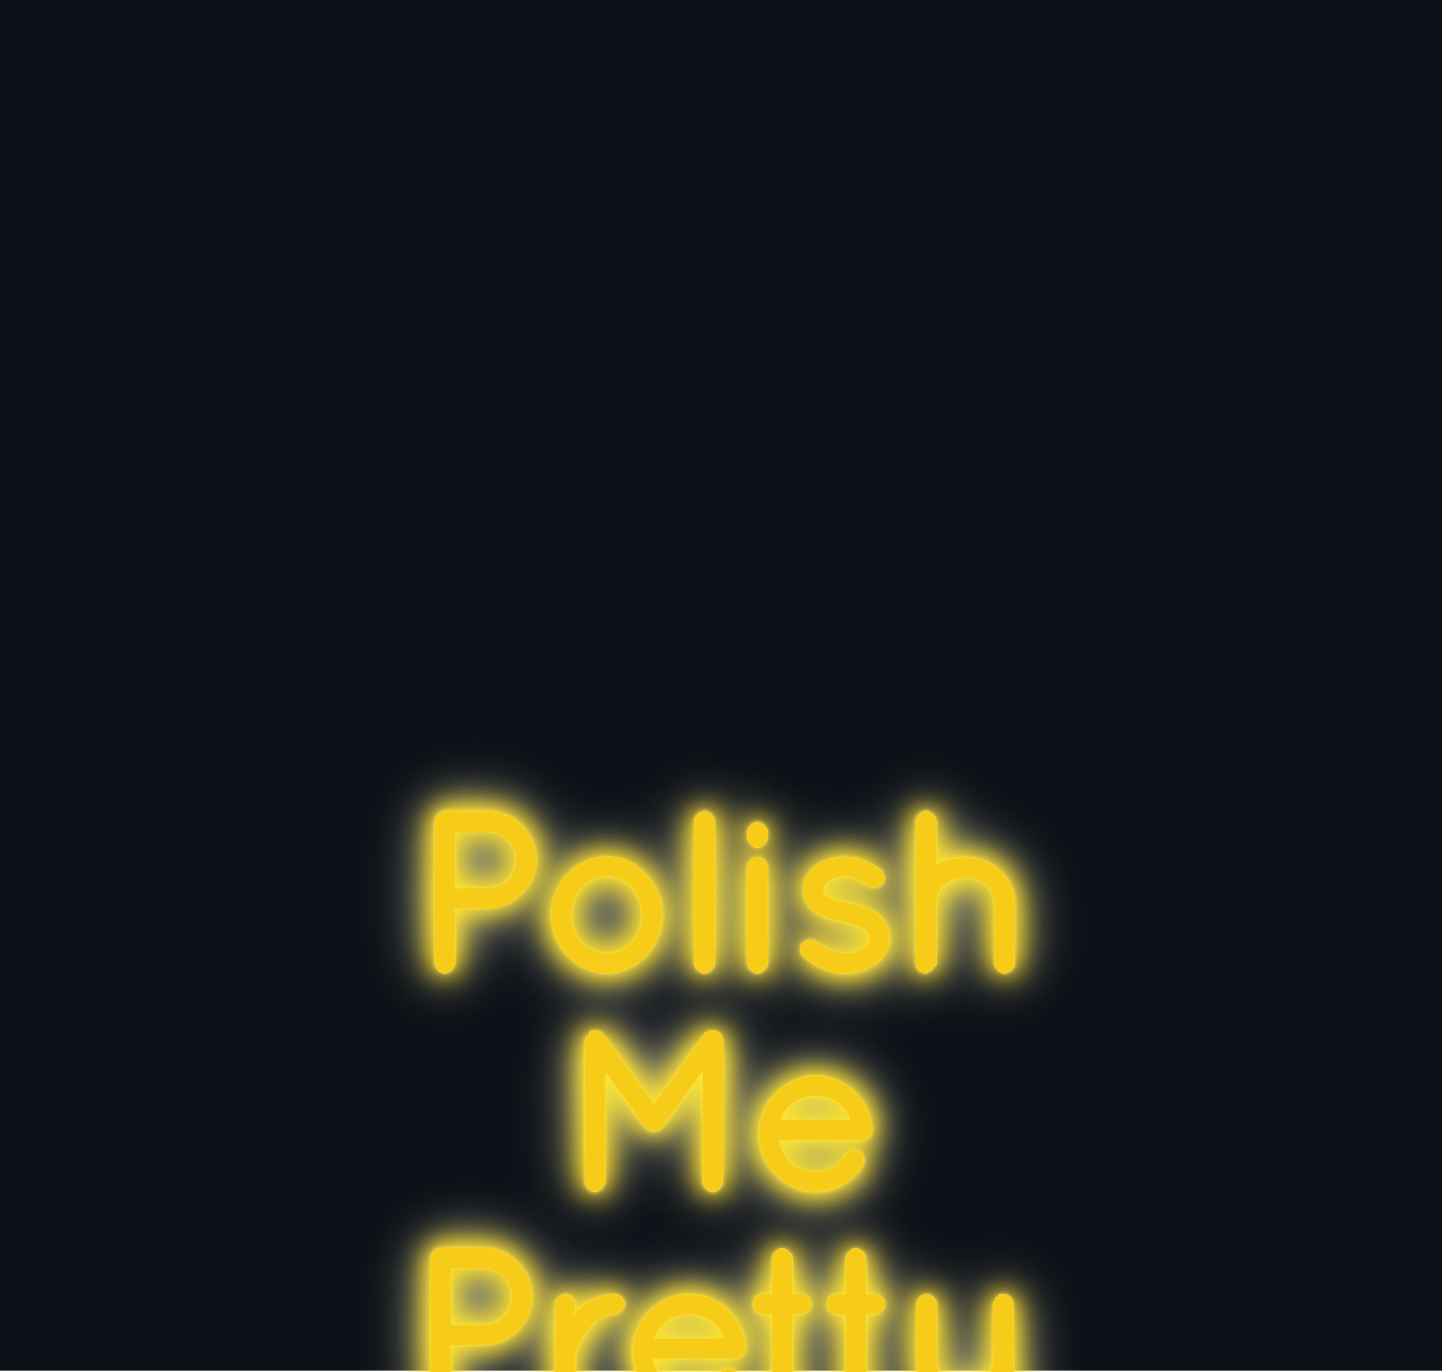 Custom neon sign - Polish Me Pretty